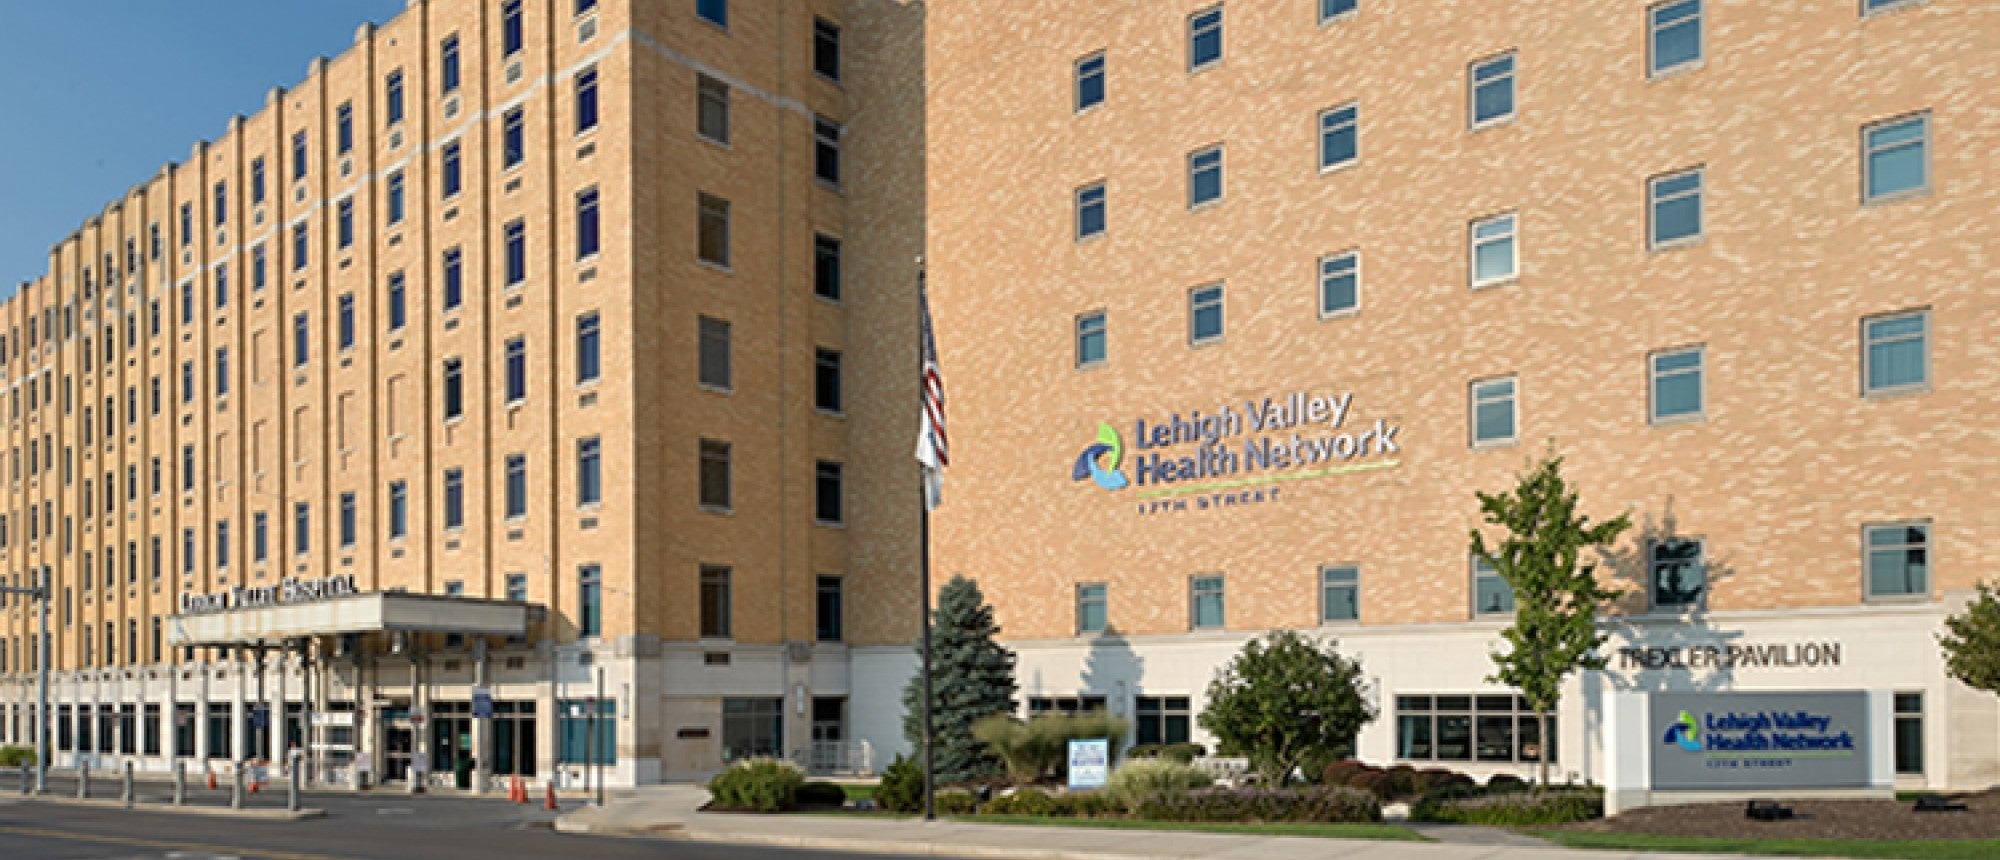 Lehigh Valley Hospital–17th Street